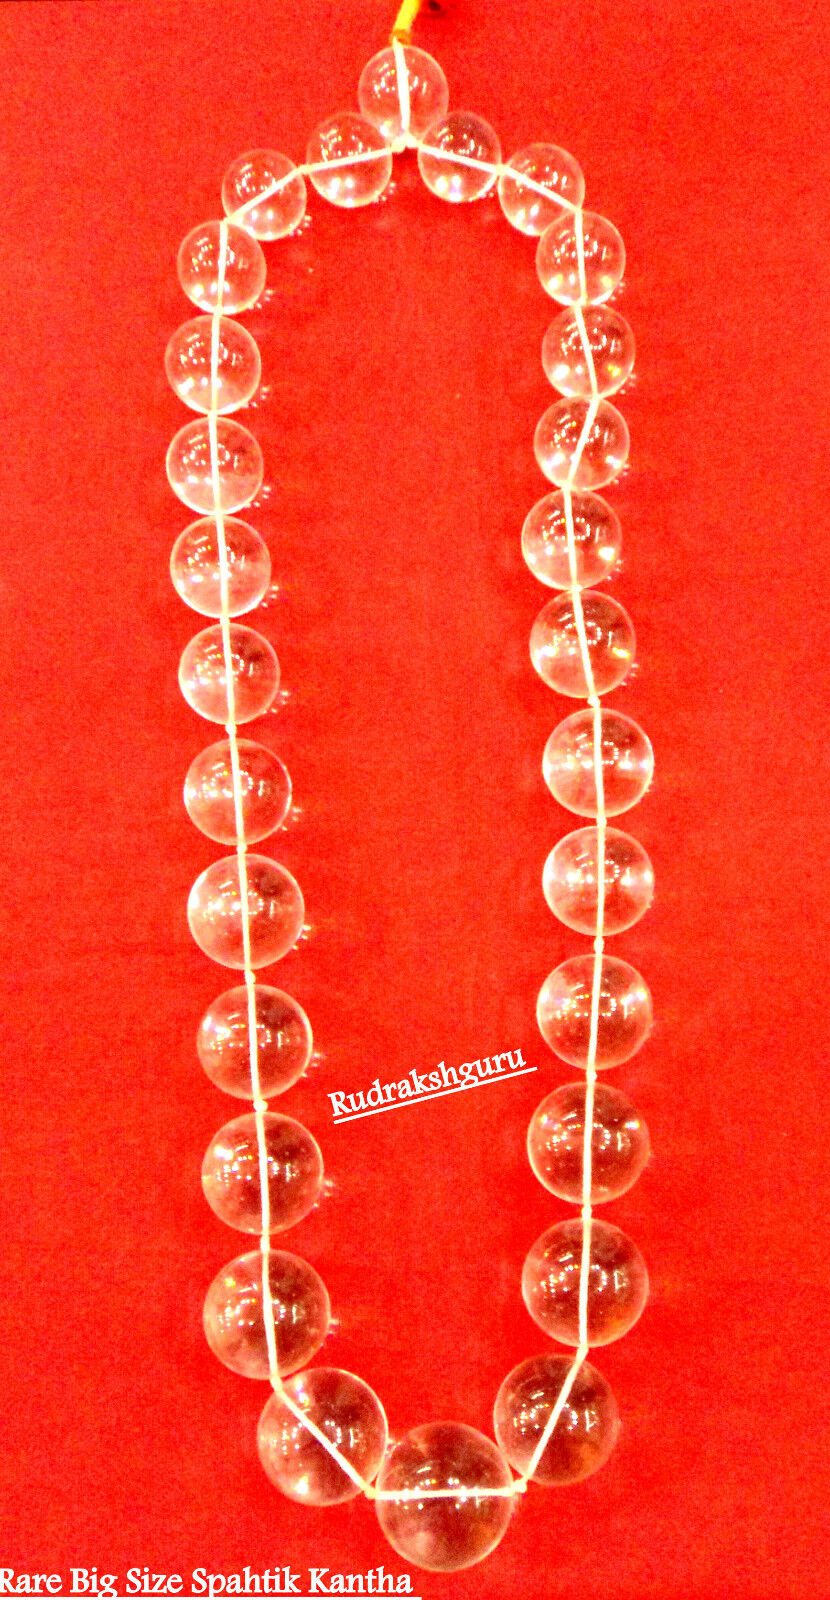 Rare Big Size Sphatik Kantha / Quartz Crystal Big Size Mala - 1120 gm - 28 beads